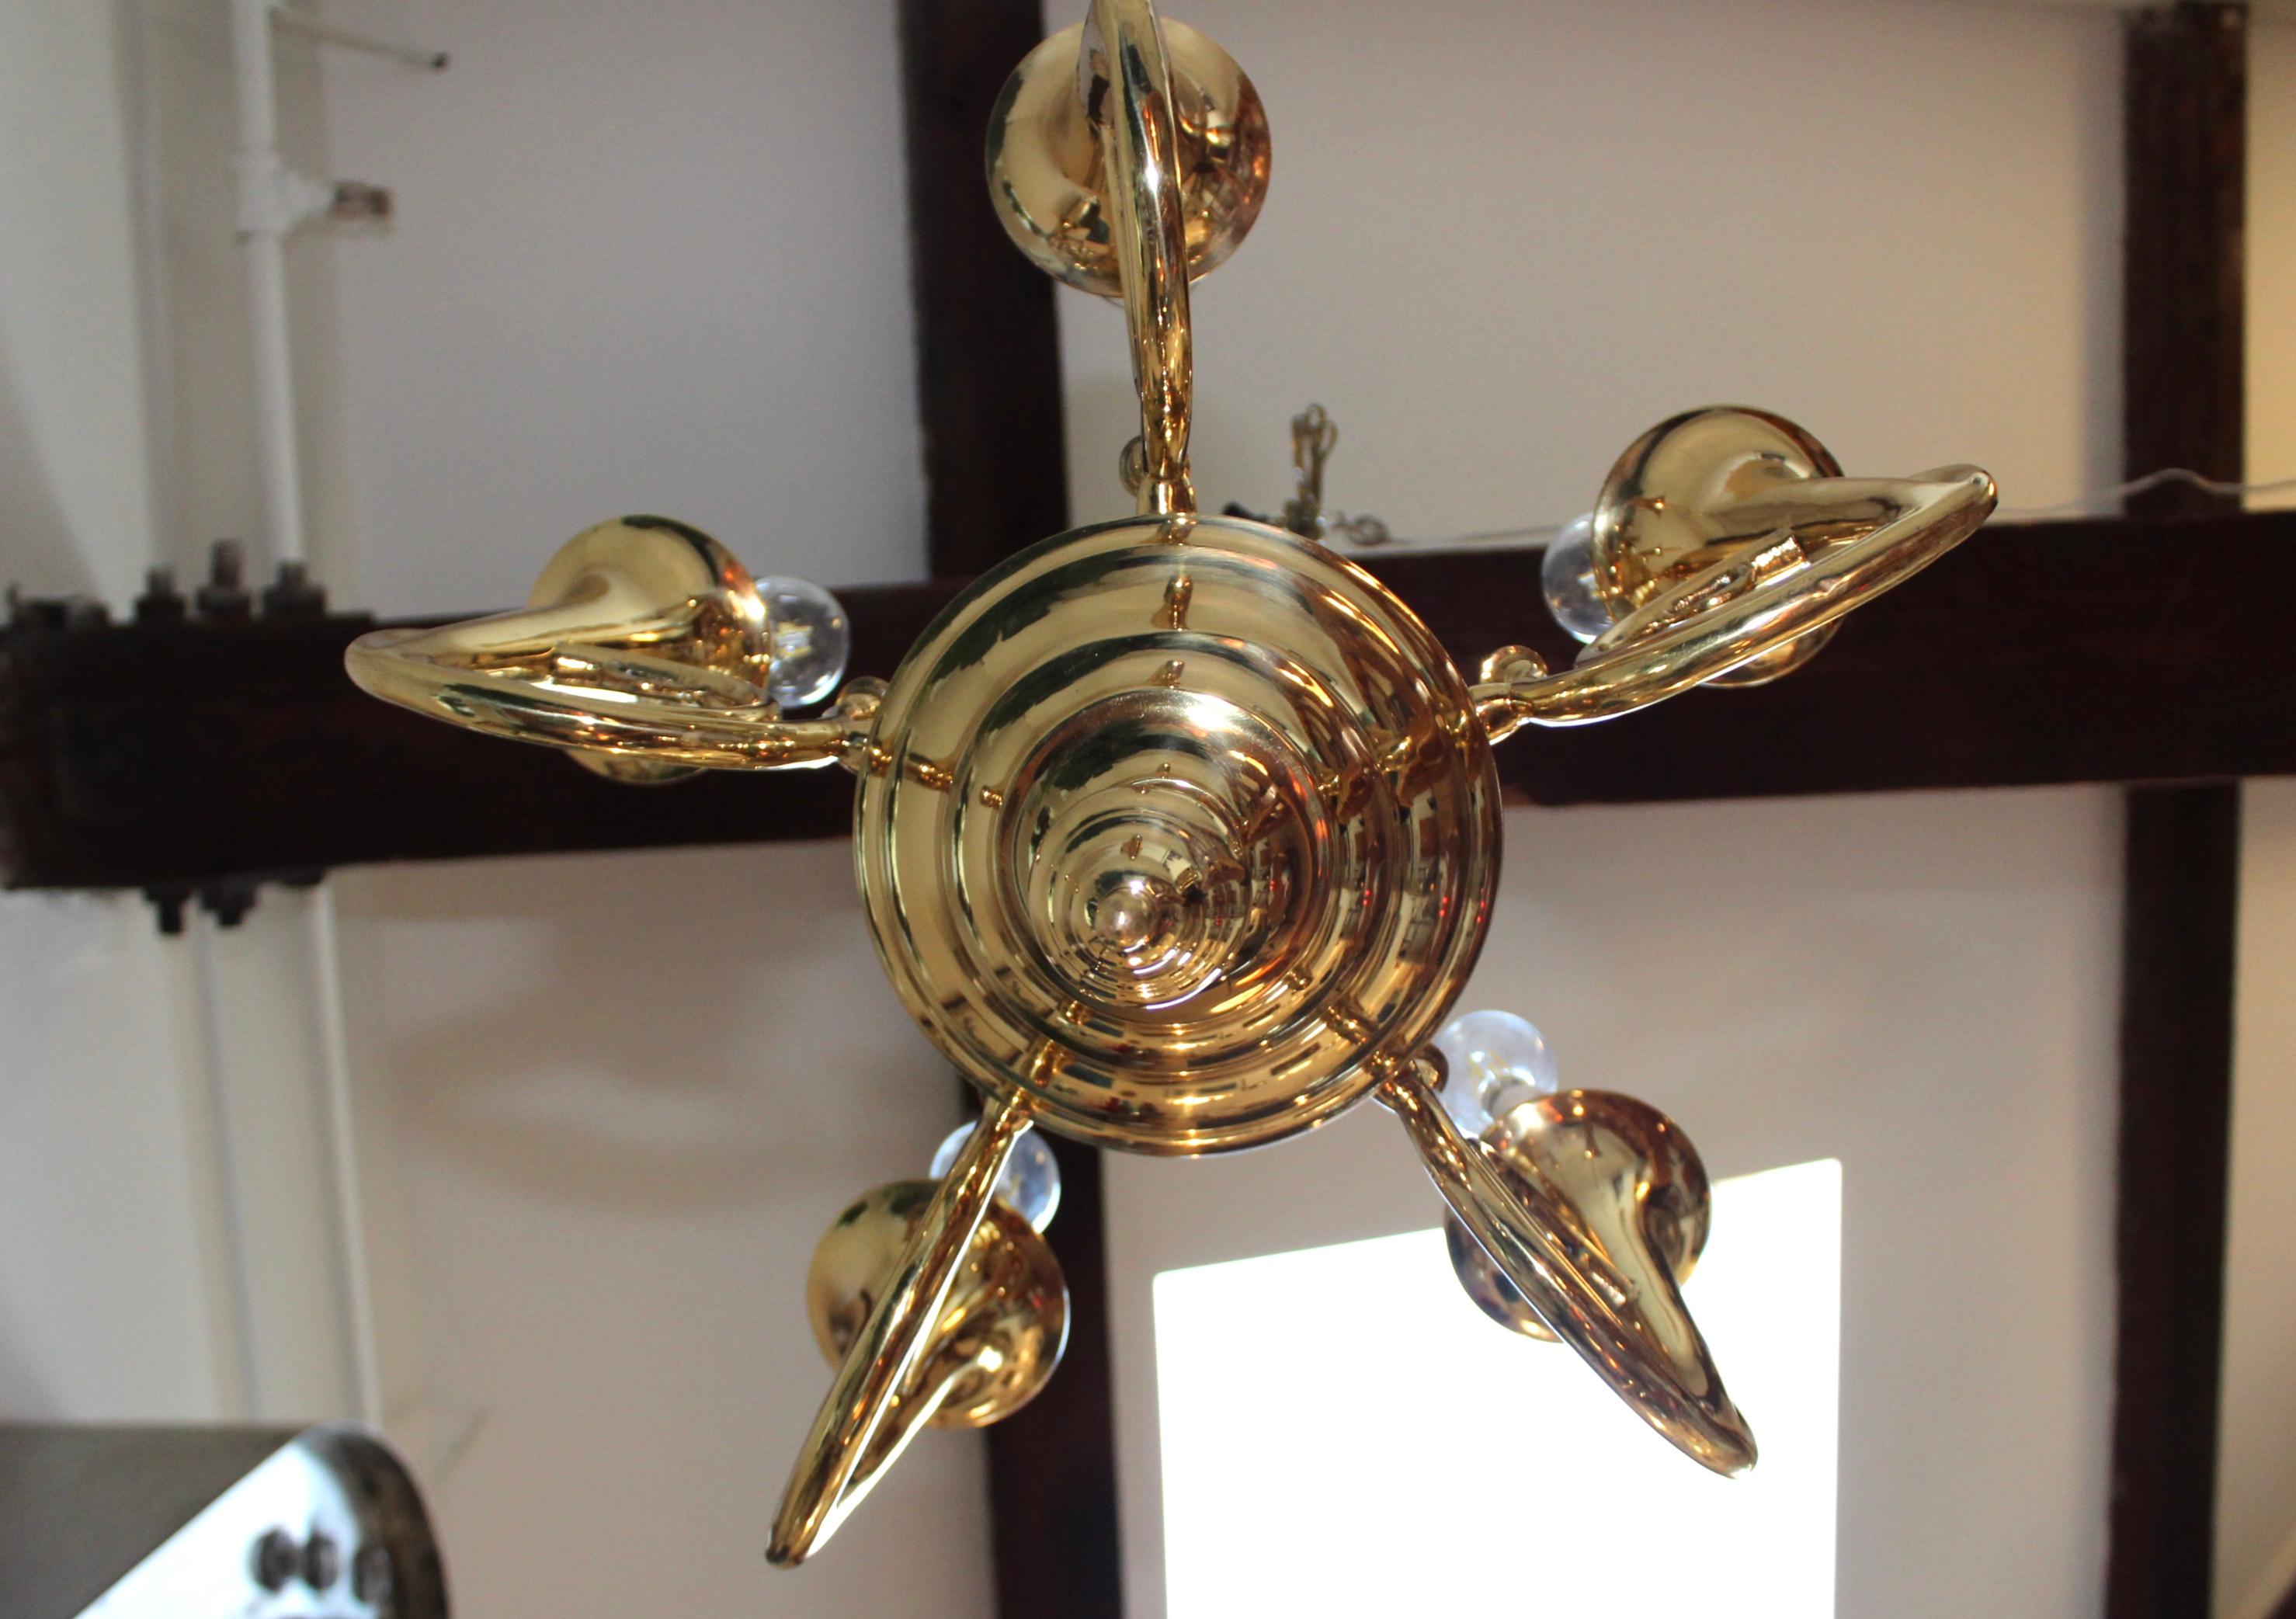 1970's brass chandelier